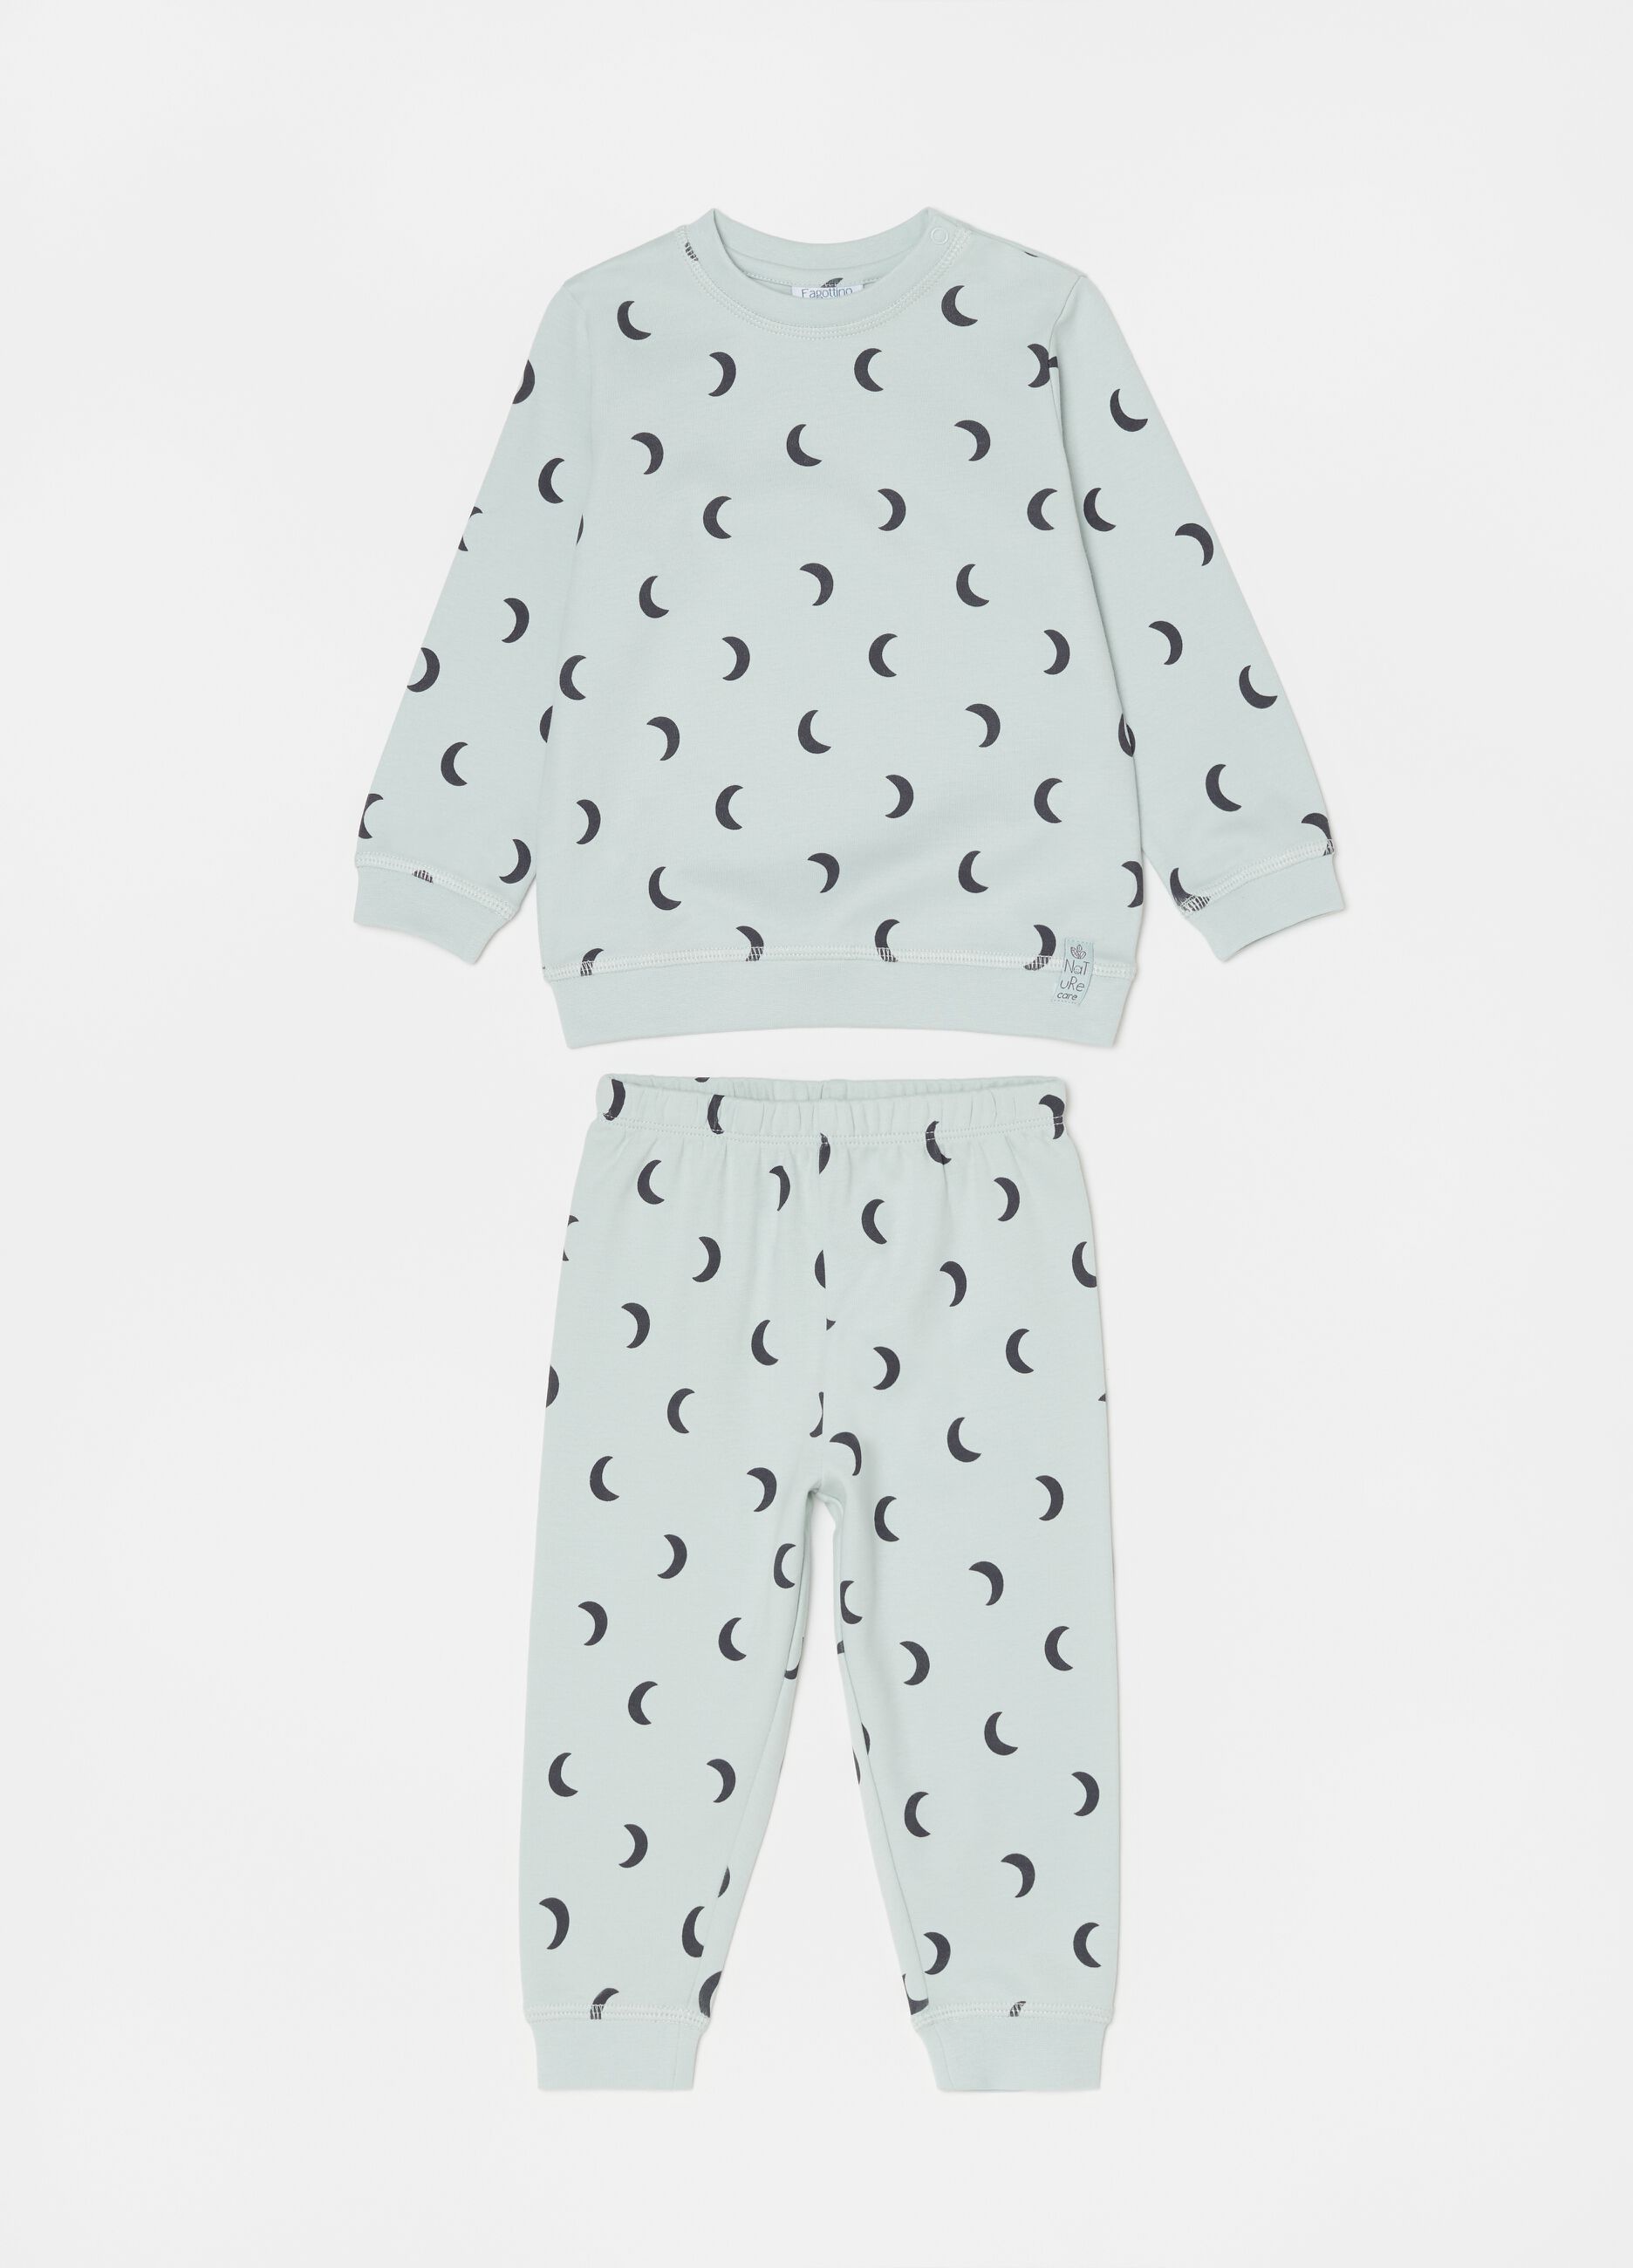 Pijama largo de algodón 100% estampado luna